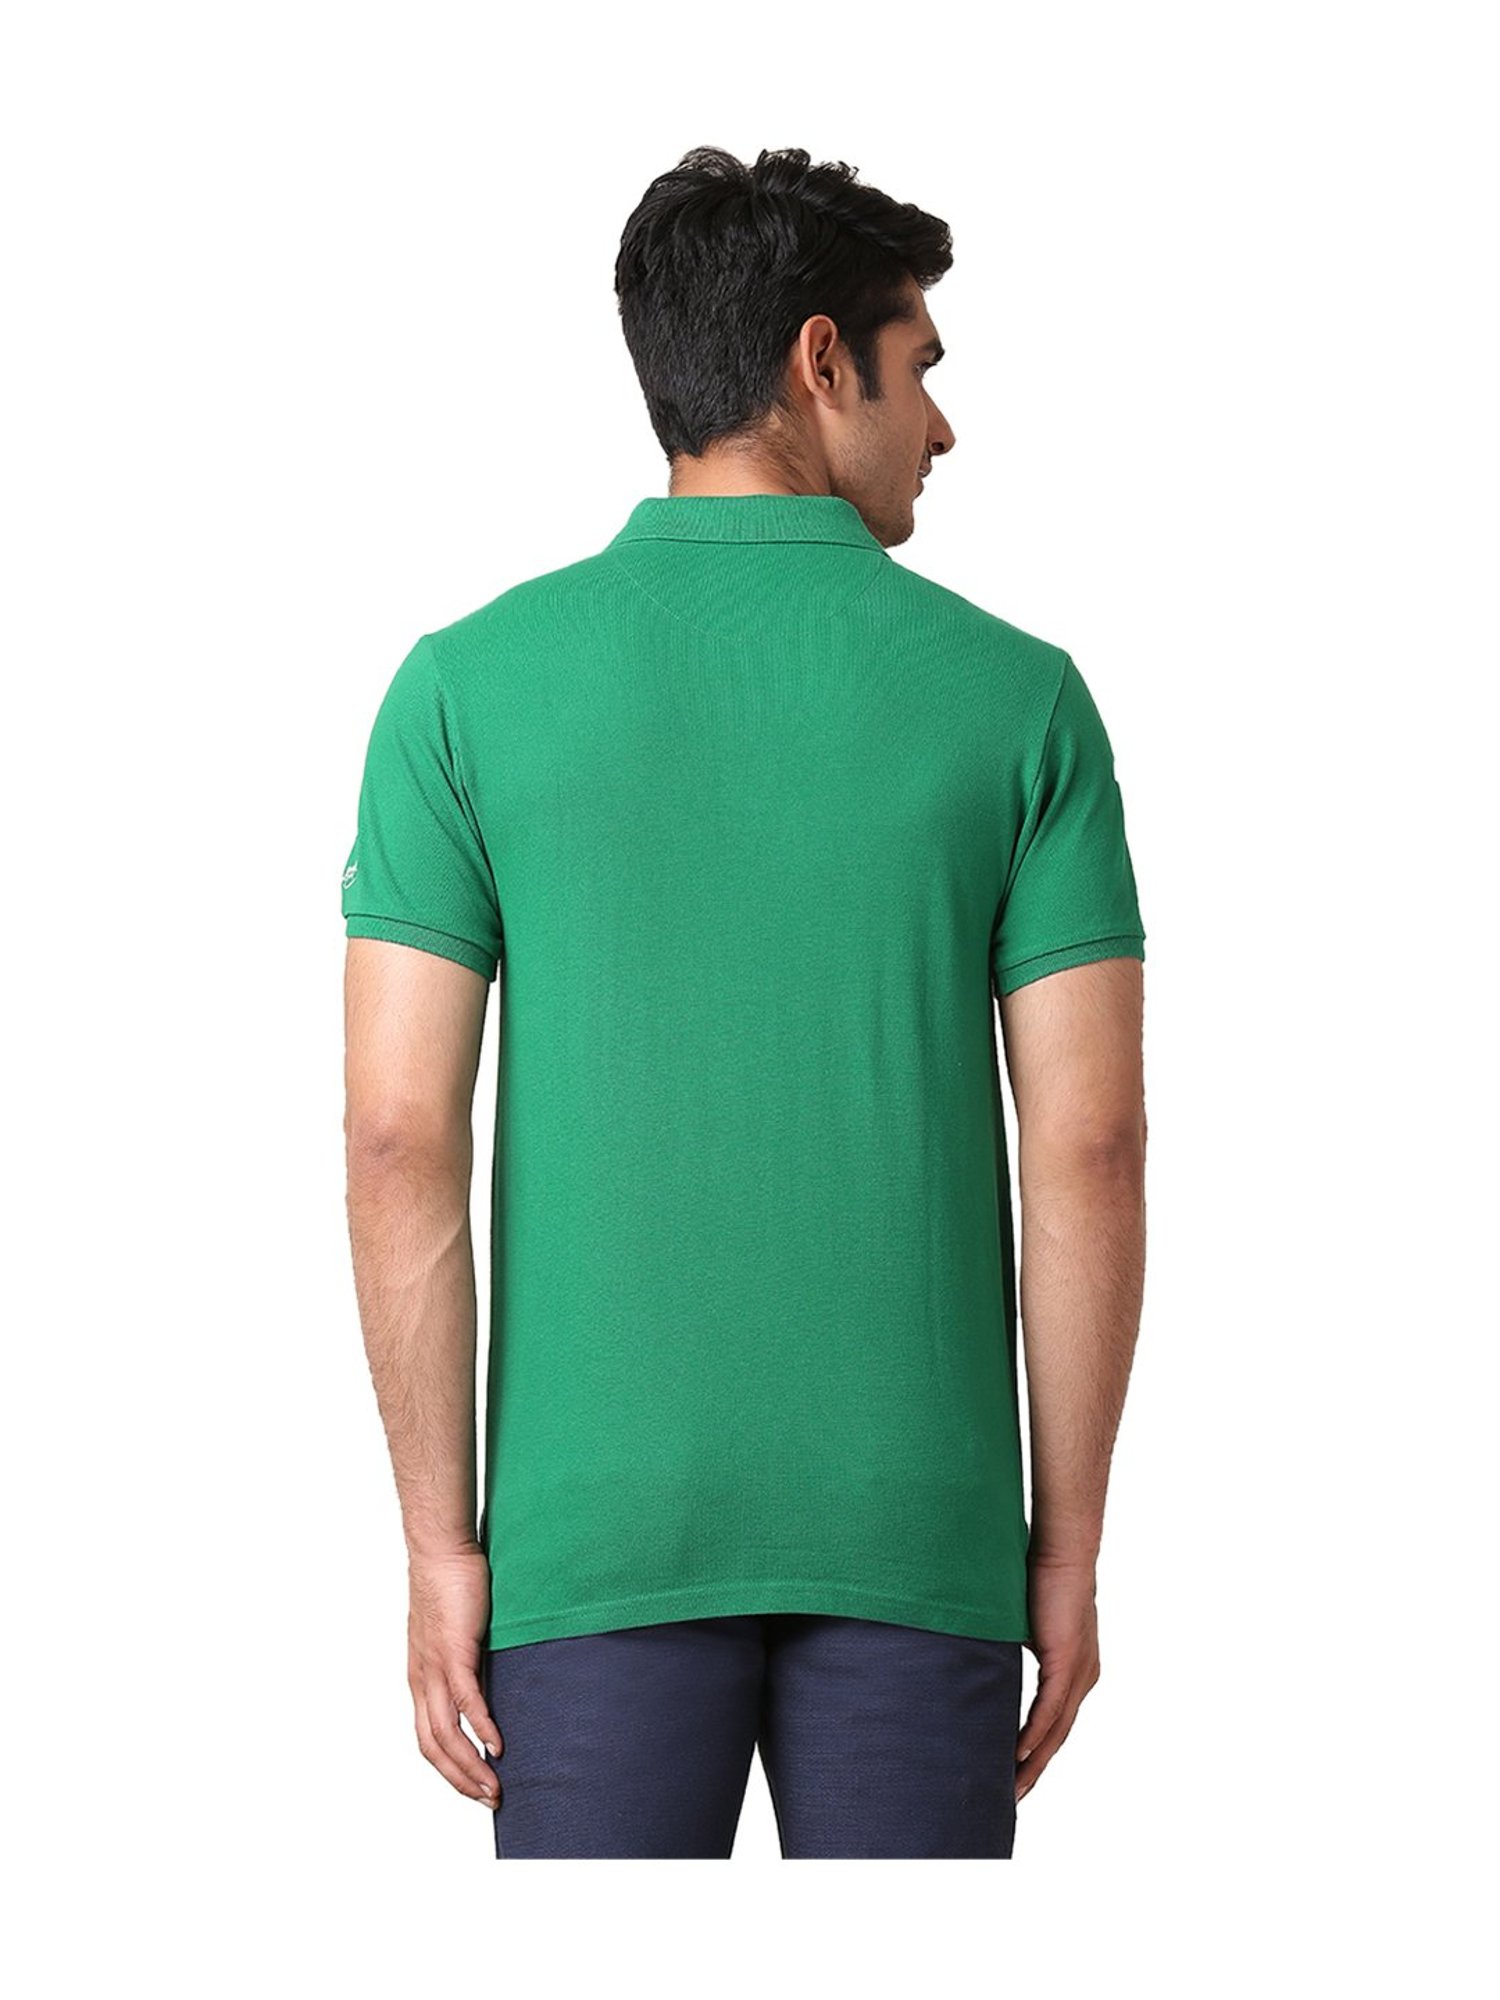 GENUINE - Tops & T-shirts, Short sleeved T-shirts